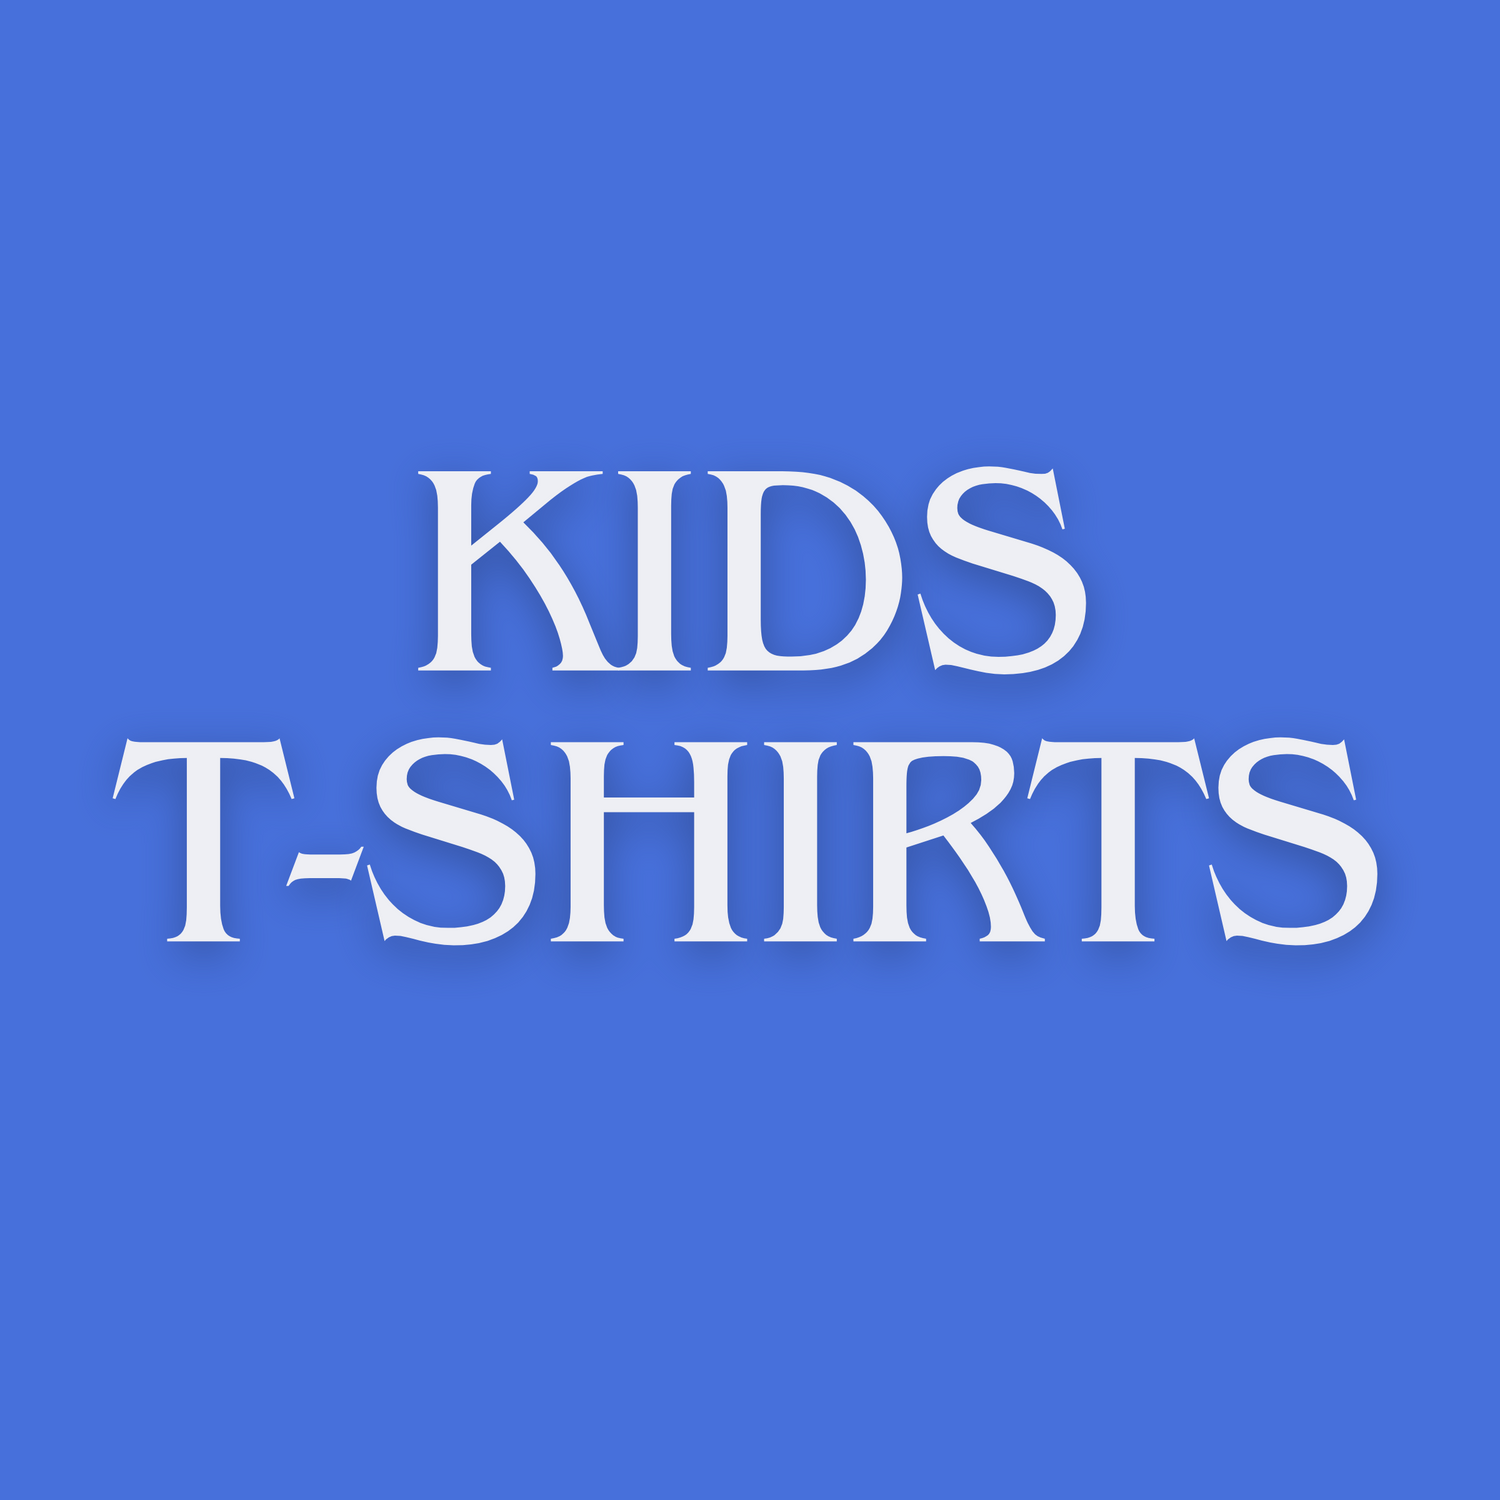 Kids t-shirts